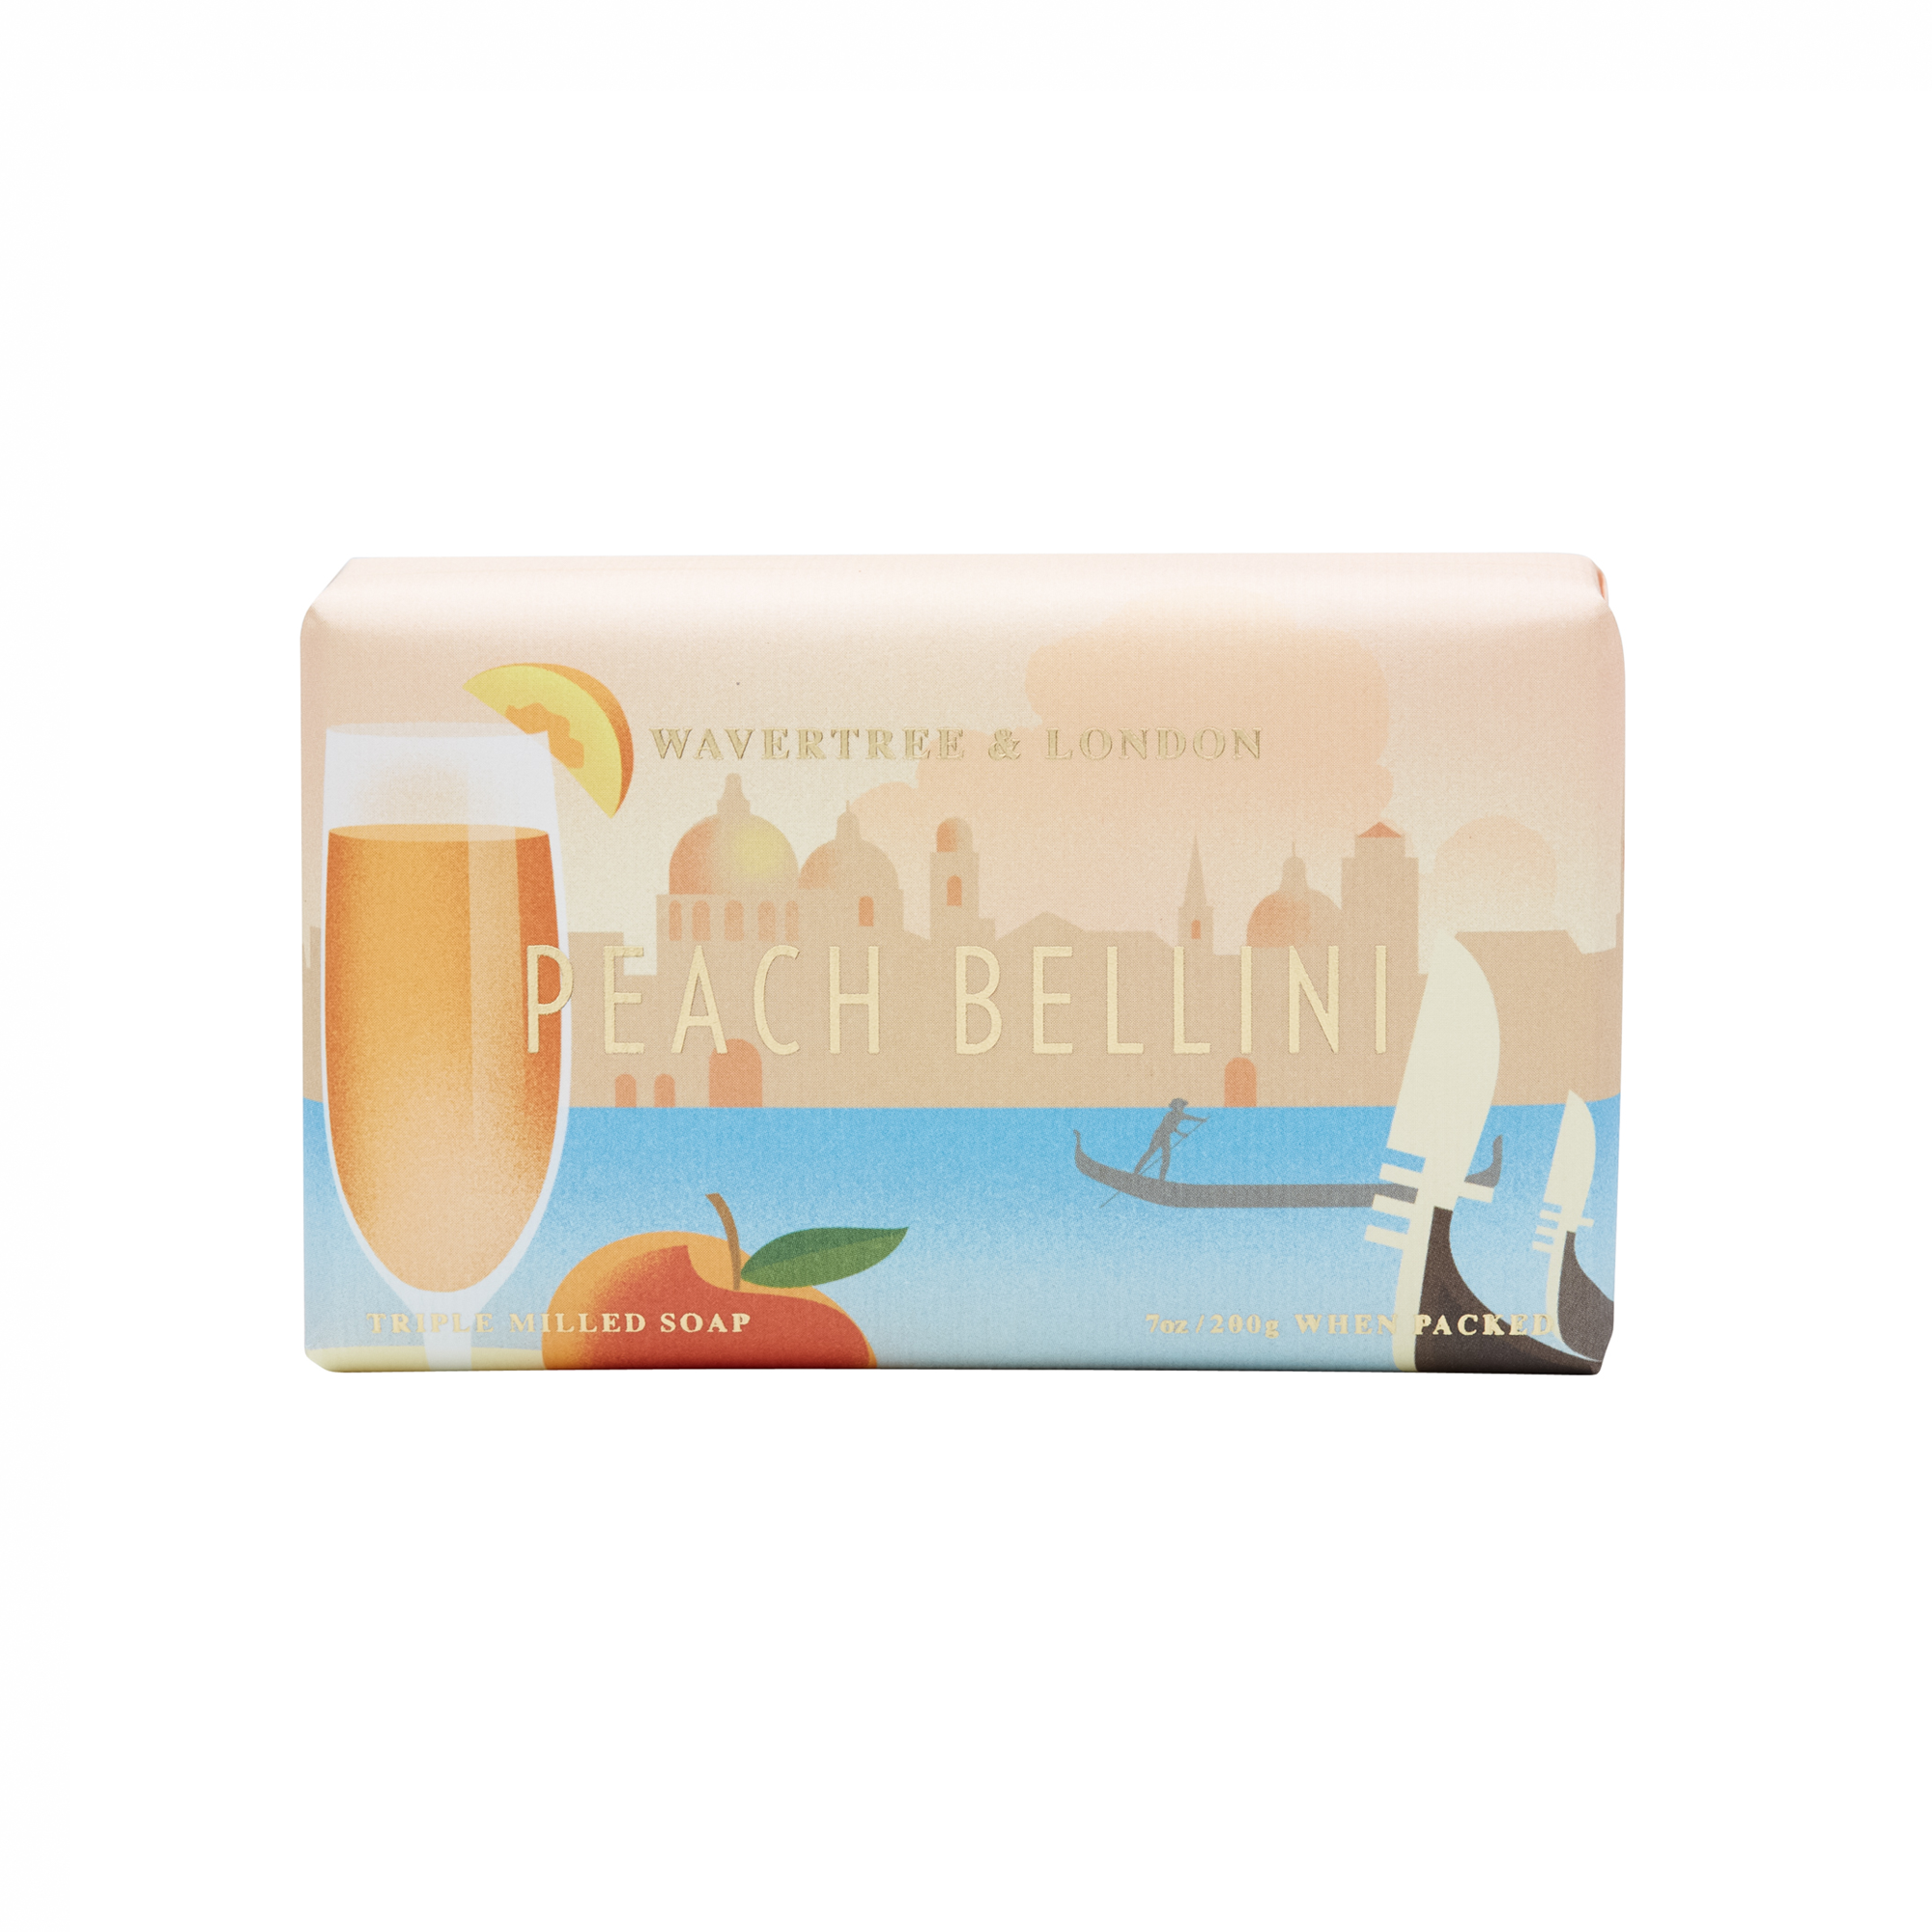 Peach Bellini Soap Bar carton 8x200g